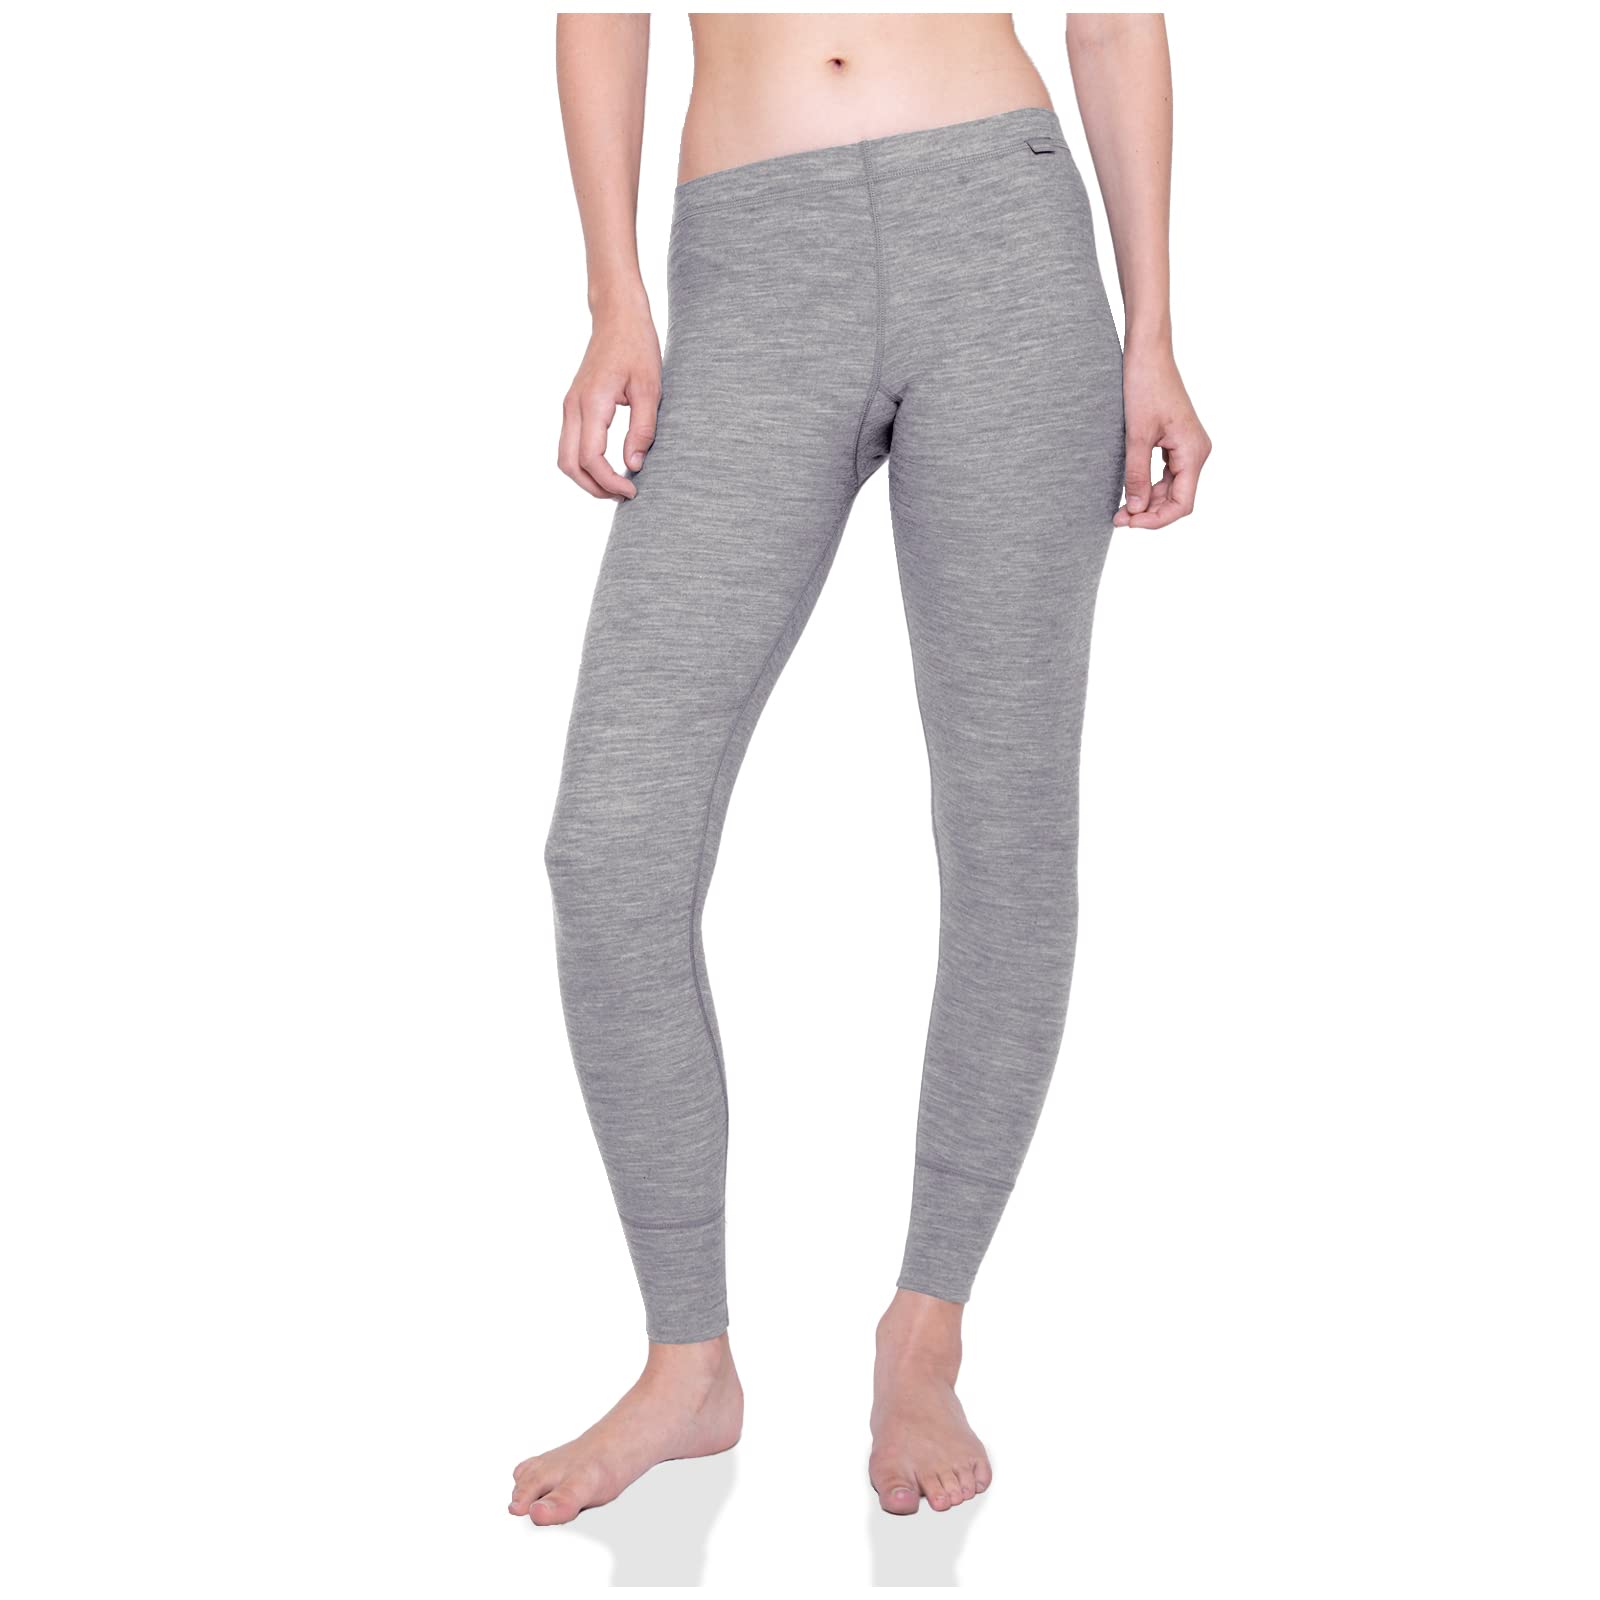 MERIWOOL Womens Base Layer Bottoms - Lightweight Merino Wool Thermal Pants  Gray Heather Small